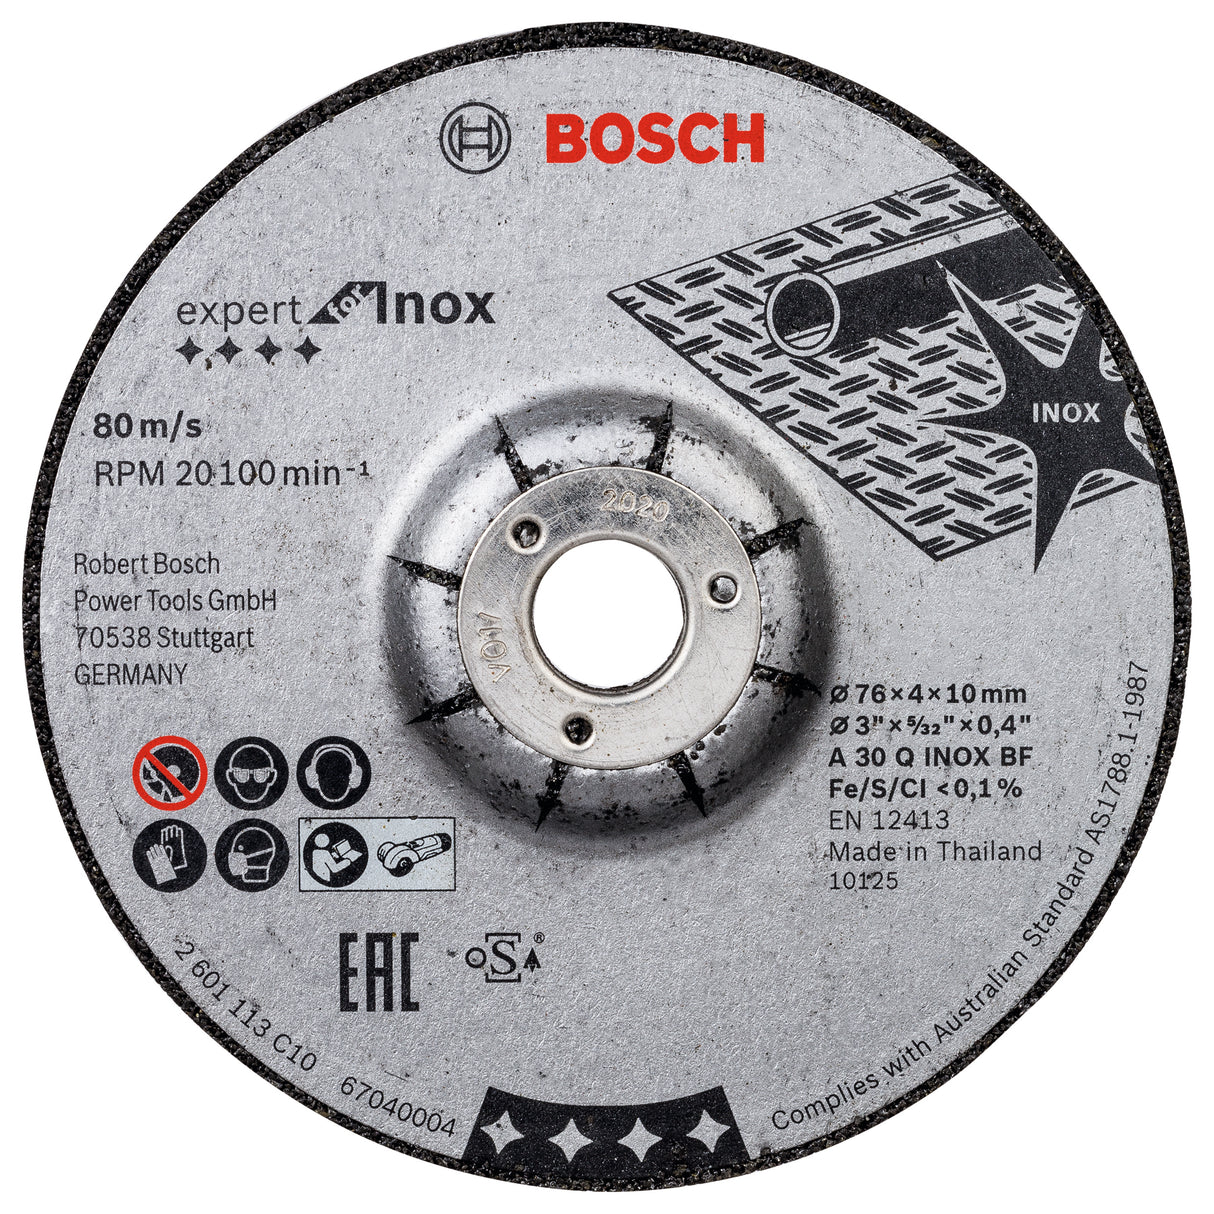 Bosch Professional Expert INOX Grinding Disc - 2pcs x 76x4x10mm, A30Q INOX BF